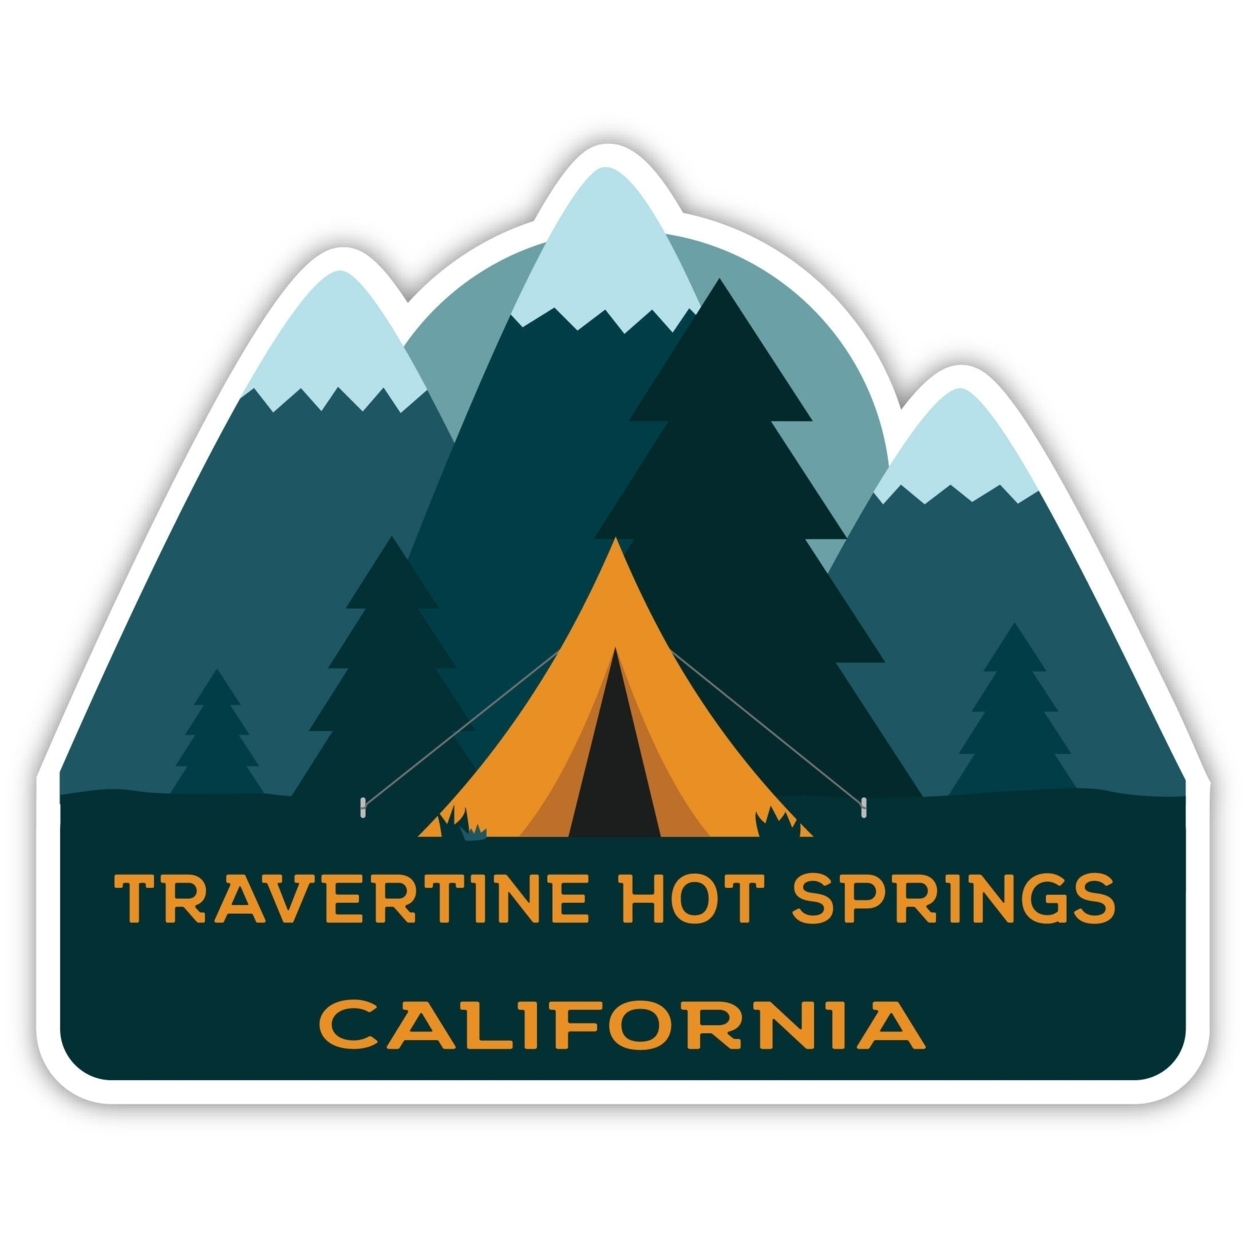 Travertine Hot Springs California Souvenir Decorative Stickers (Choose Theme And Size) - Single Unit, 2-Inch, Tent